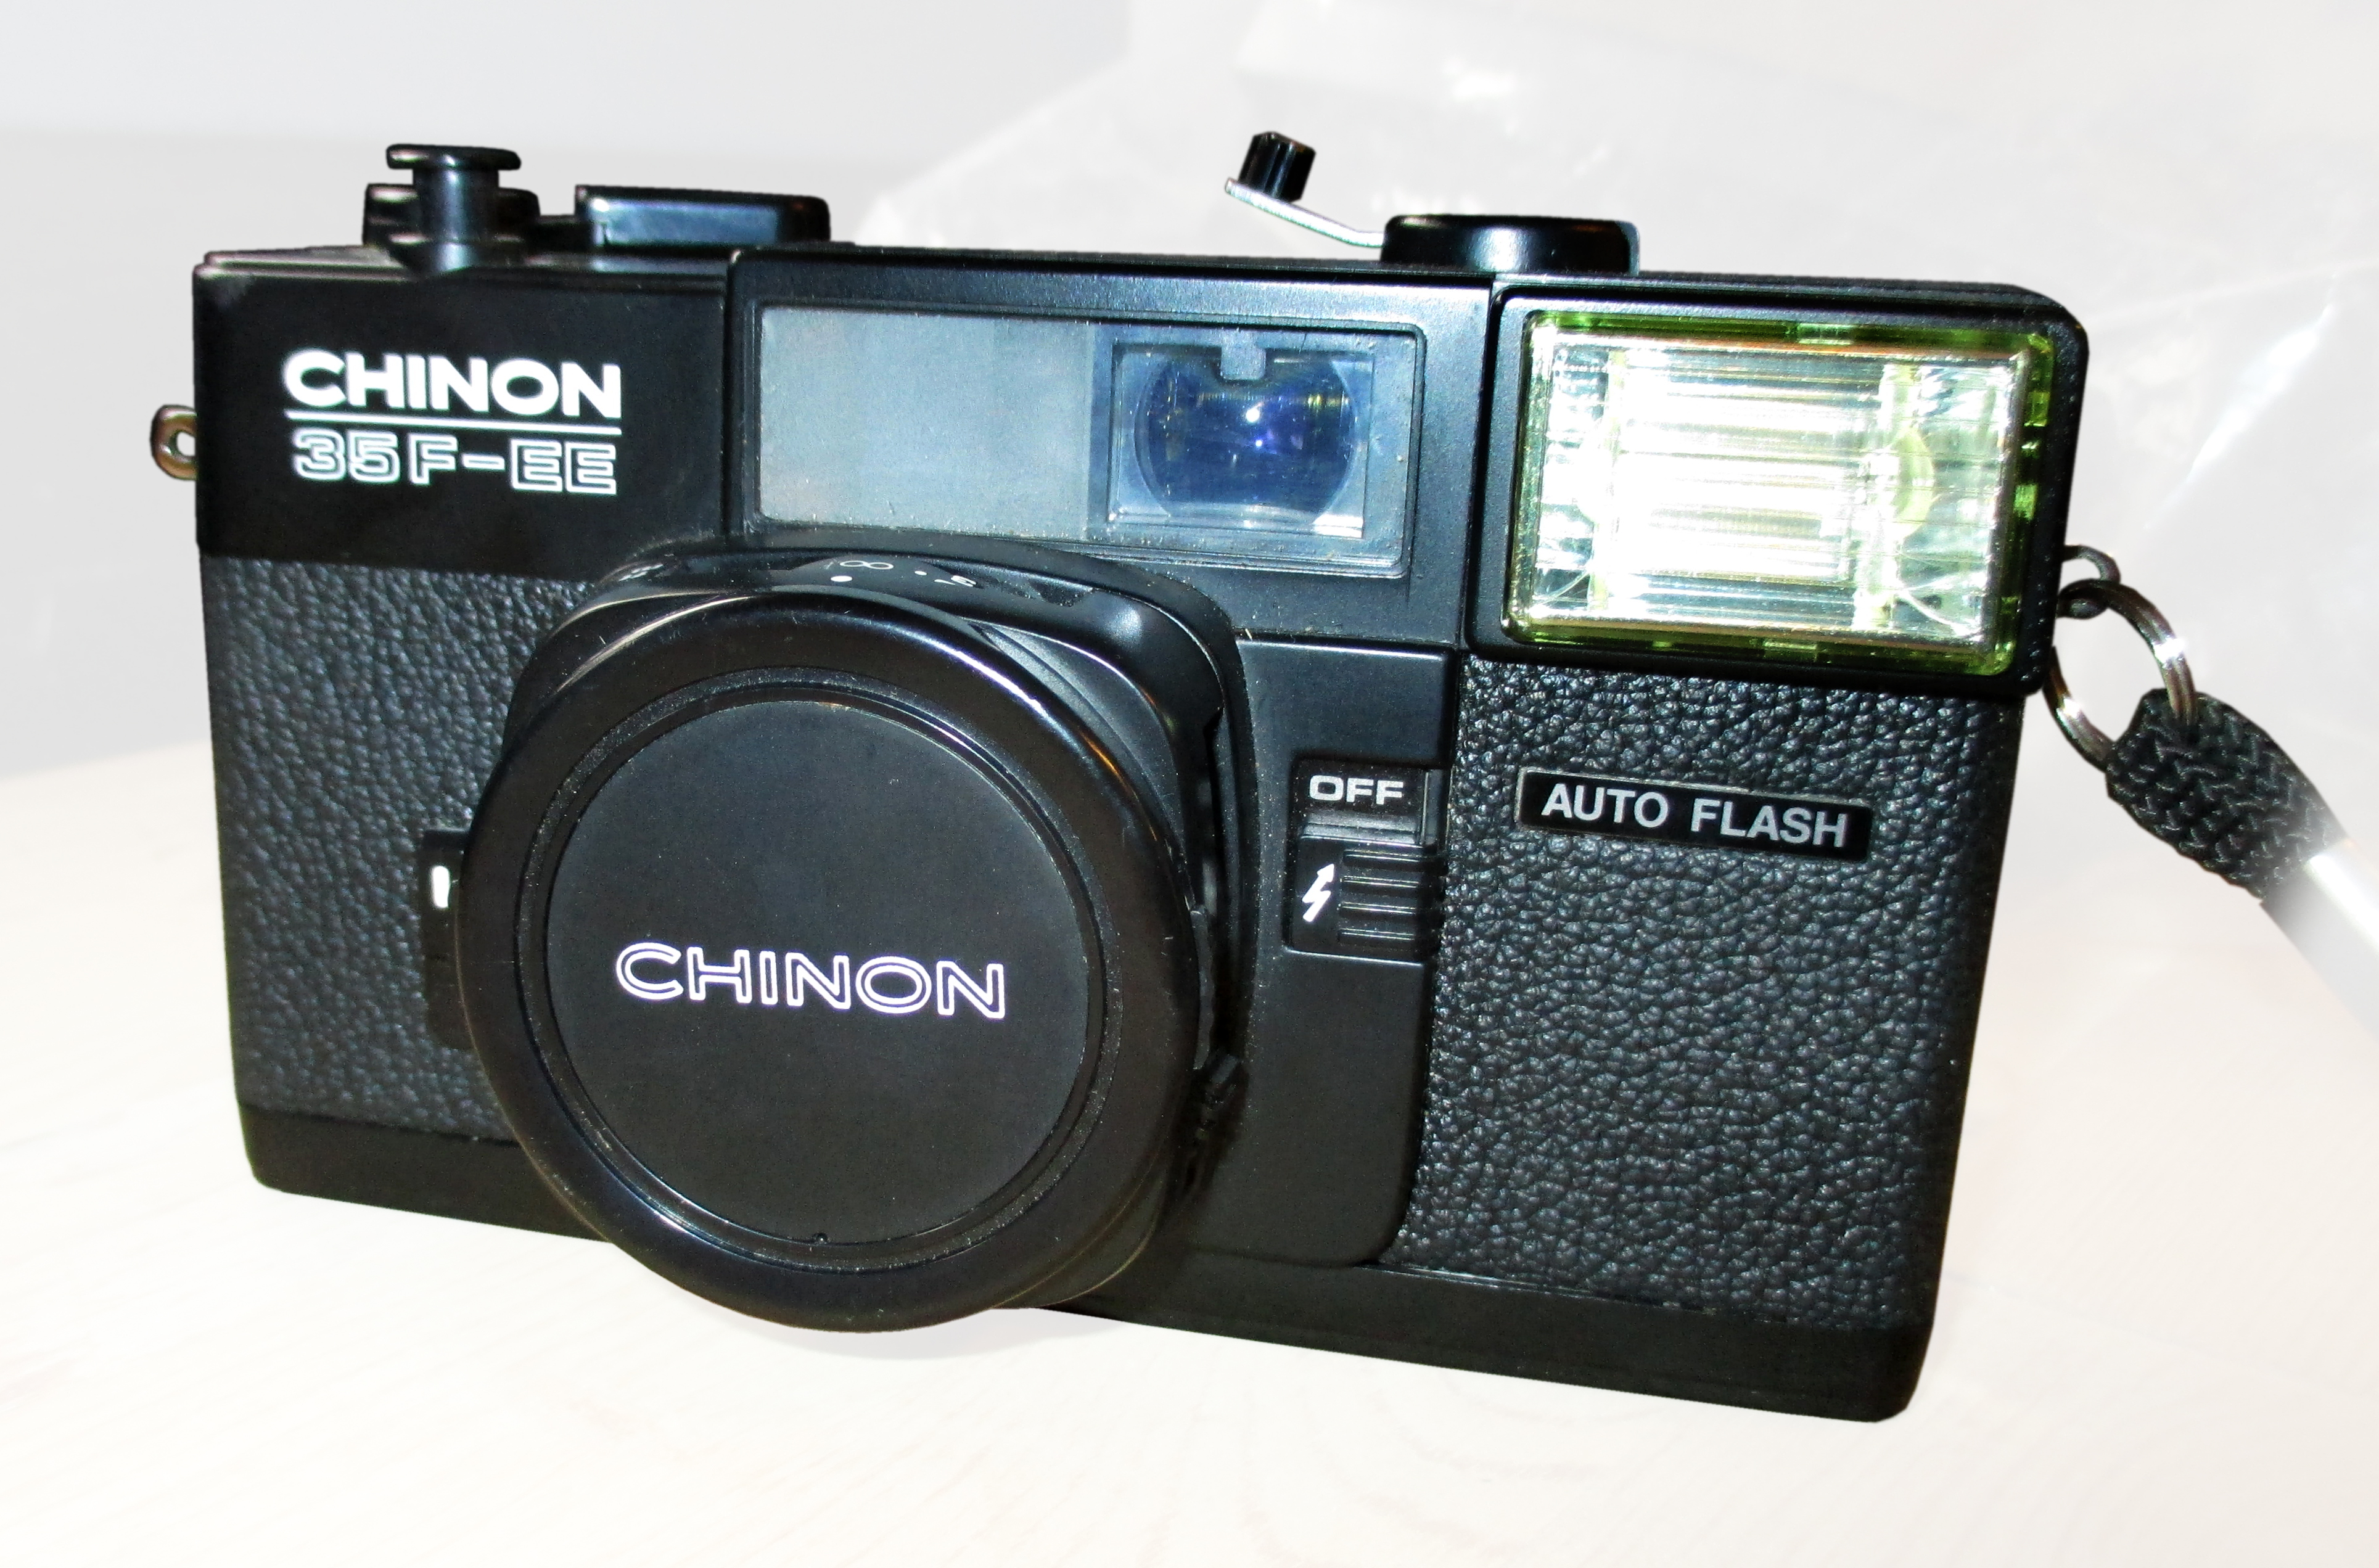 Chinon 35F-EE 8257